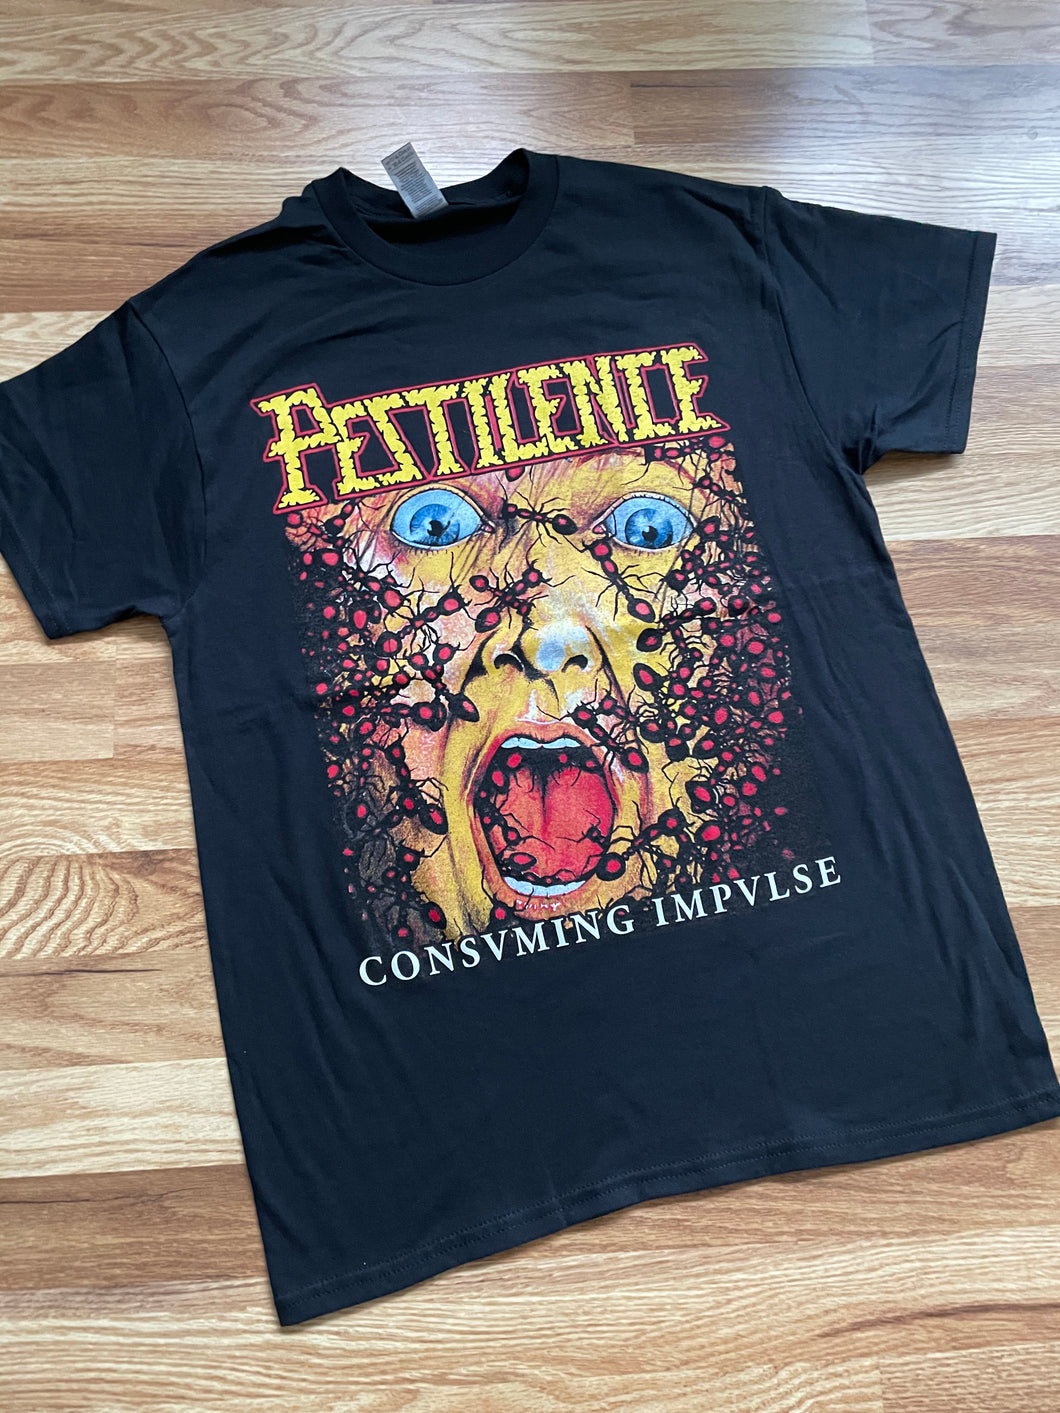 Pestilence - Consuming Impulse Shirt IMPORTED